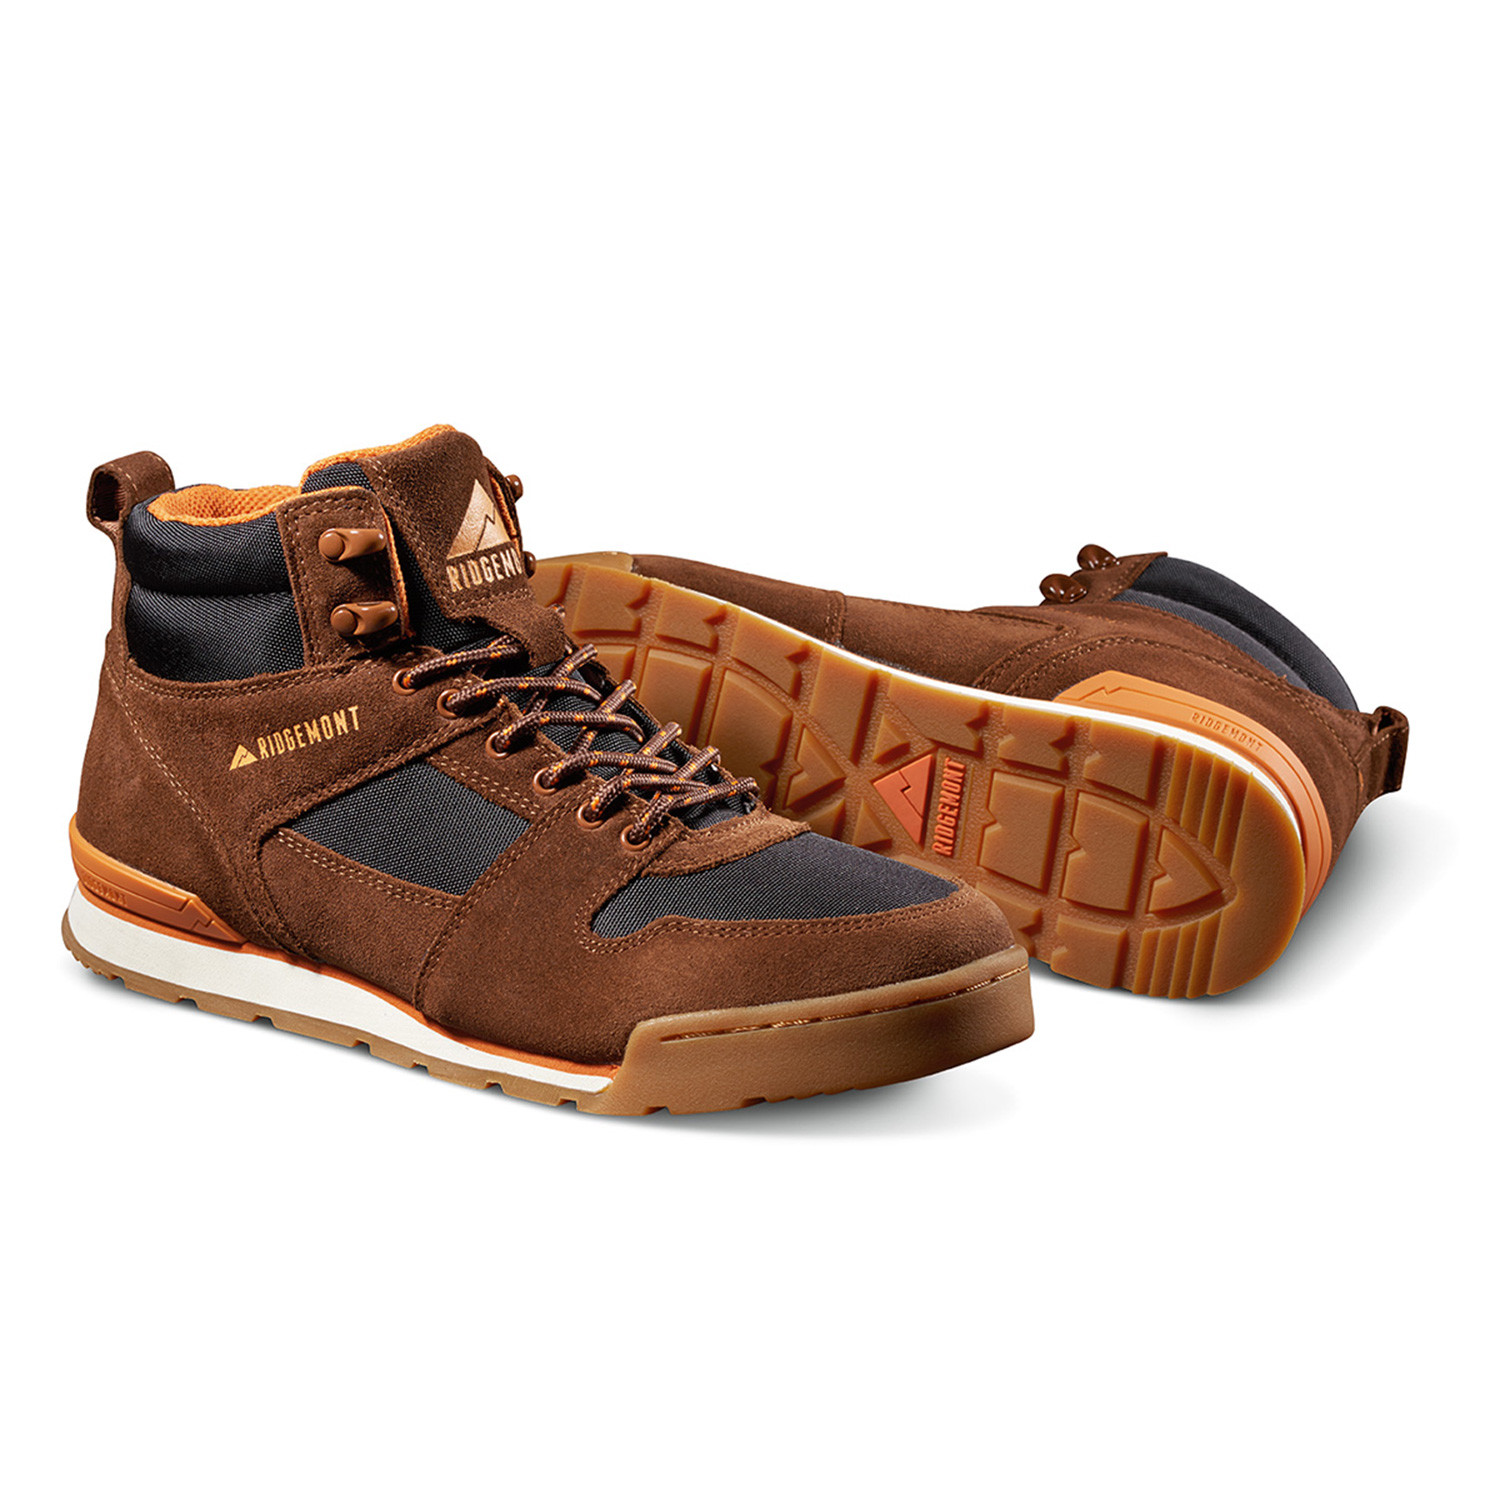 Ridgemont Monty Hi Men's Light Hiking Boots - Oiled Suede Brown/Orange, Brown/Orange / Men's 9.5